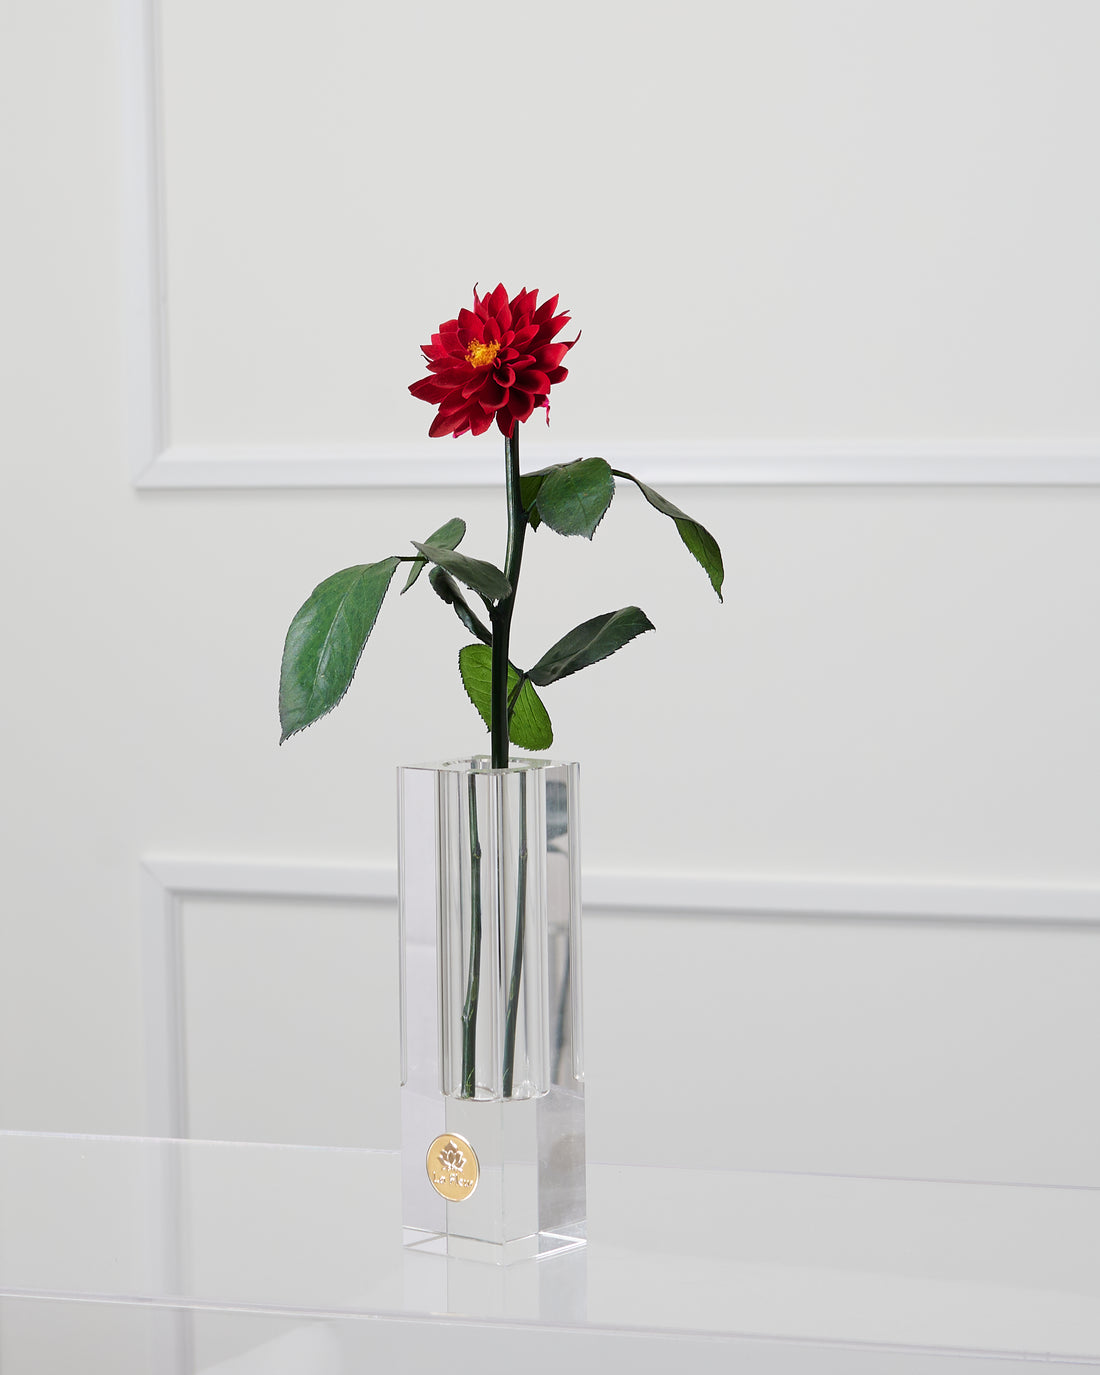 Birth Month Collection - December by La Fleur Lifetime Flowers